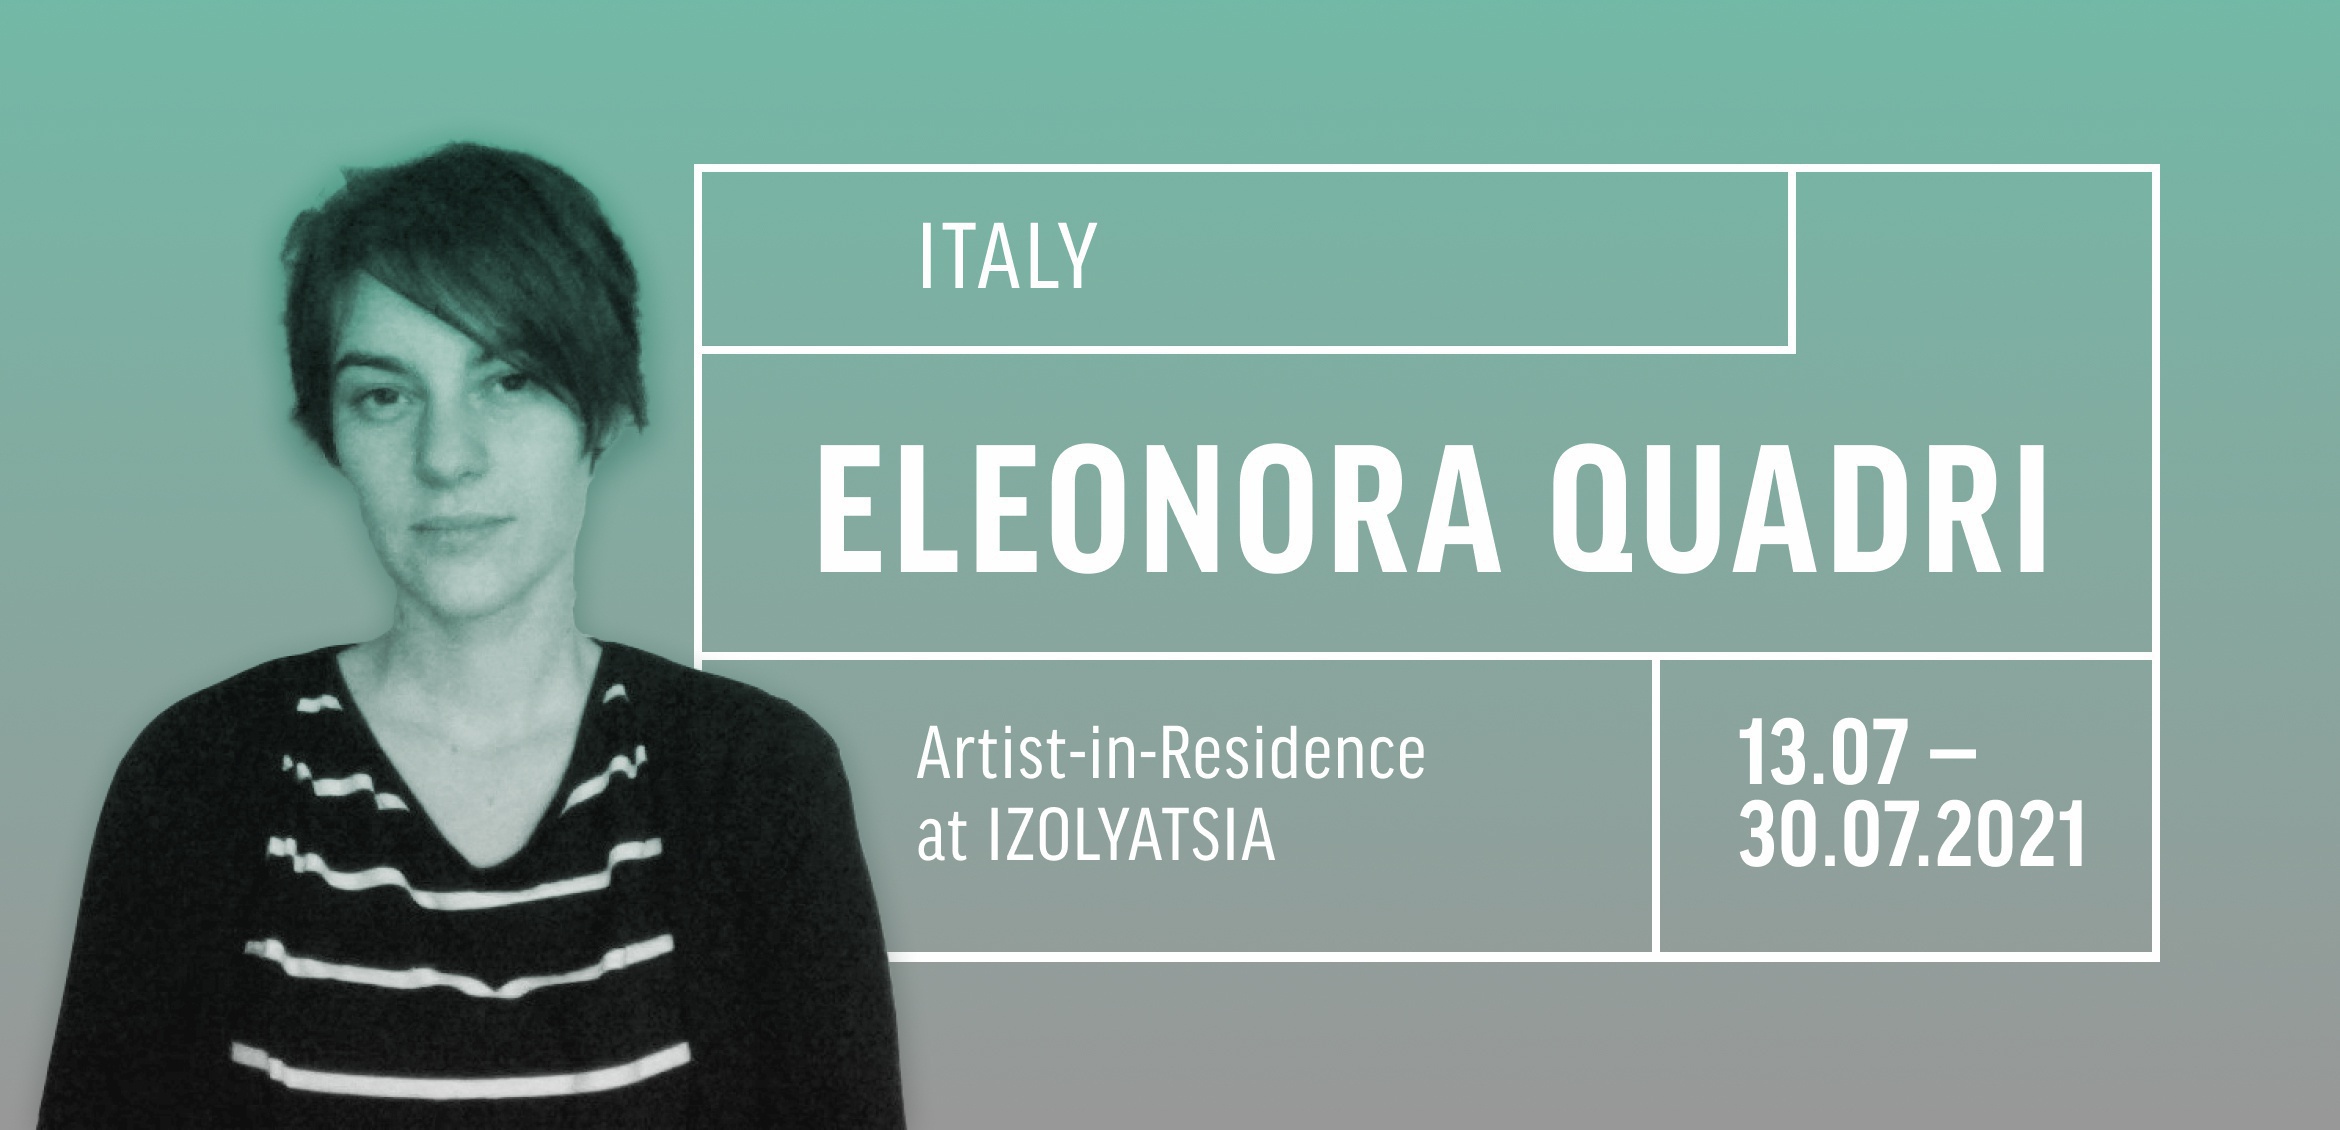 Artist Eleonora Quadri is in residence at IZOLYATSIA